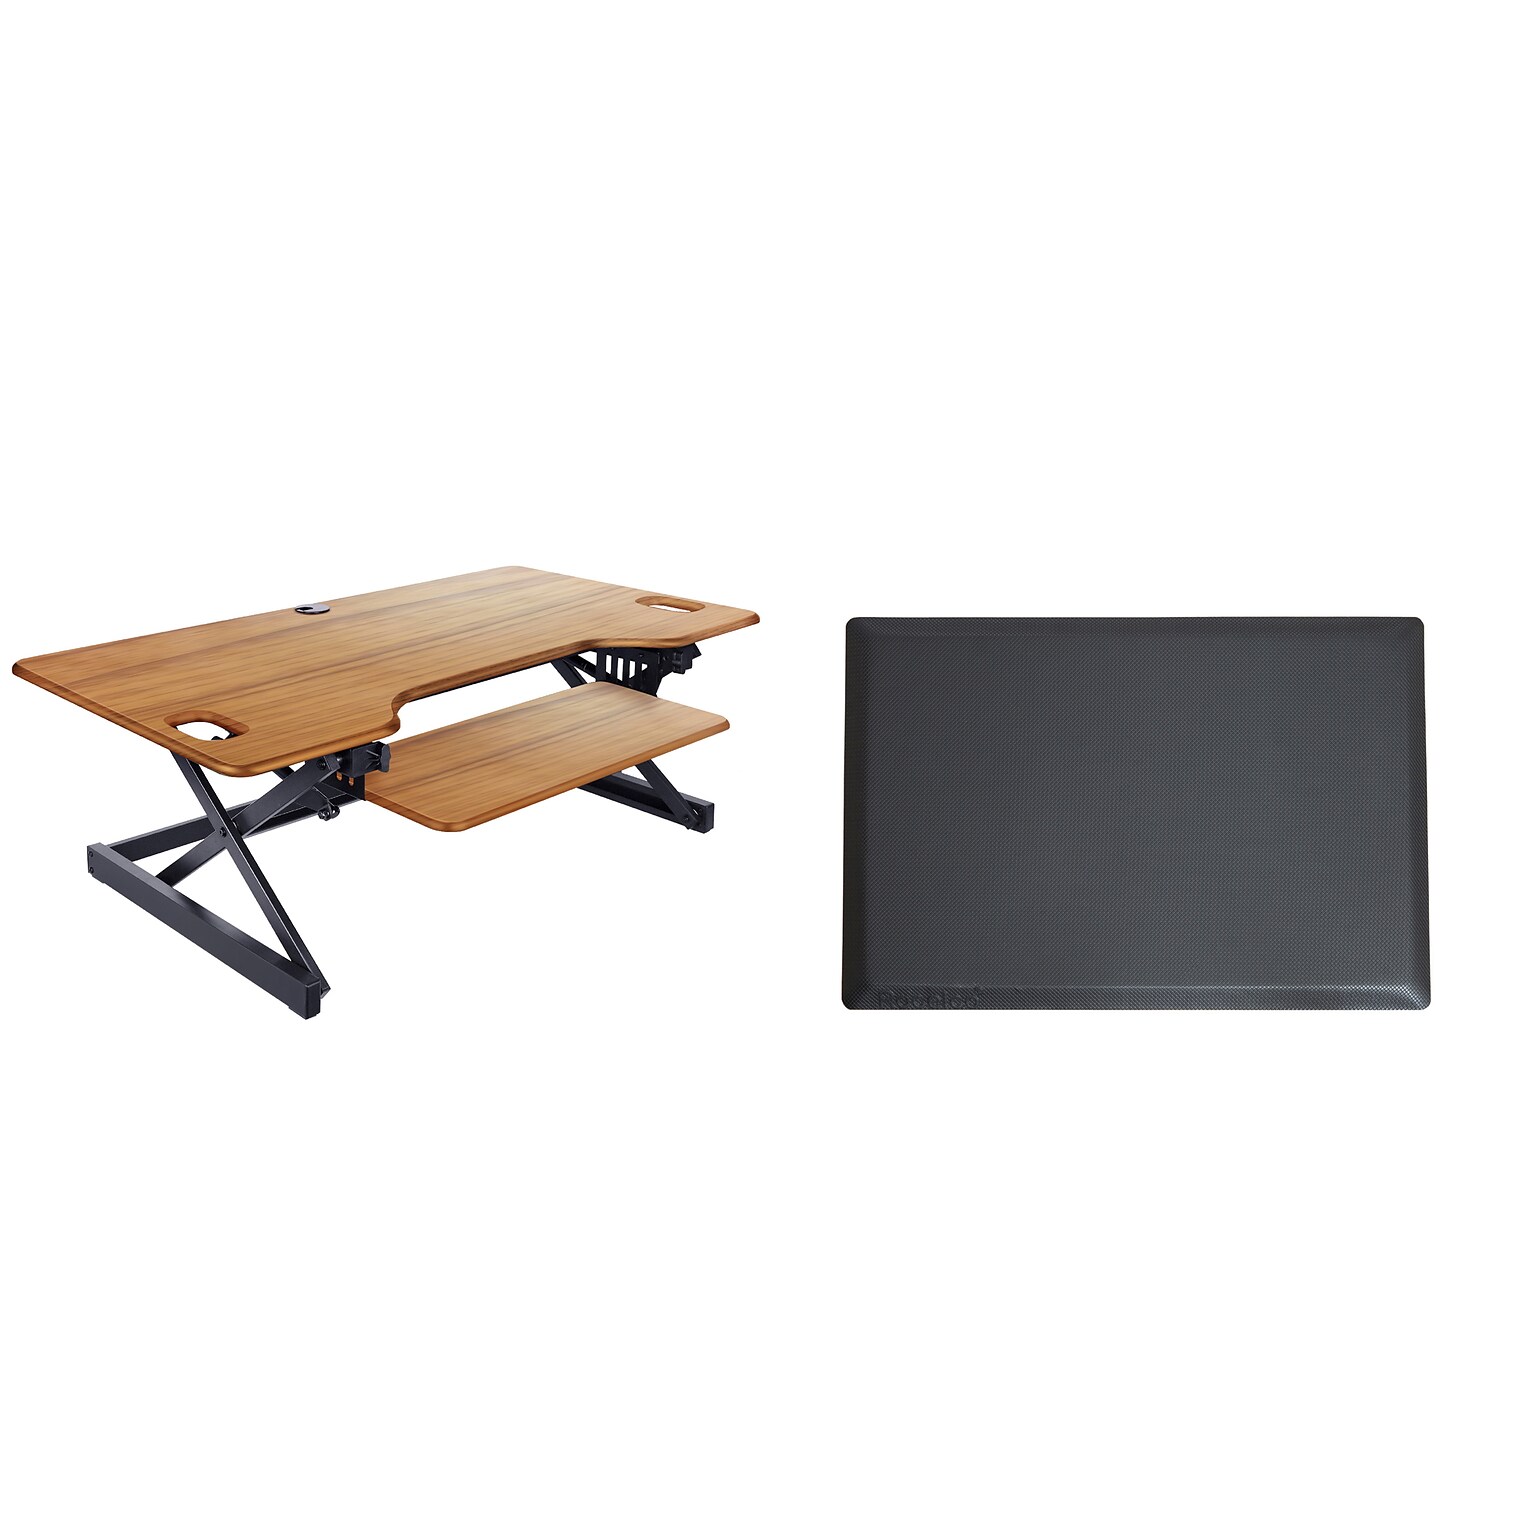 Rocelco 46W 5-20H Adjustable Standing Desk Converter with Anti Fatigue Mat, Teak (R DADRT-46-MAFM)